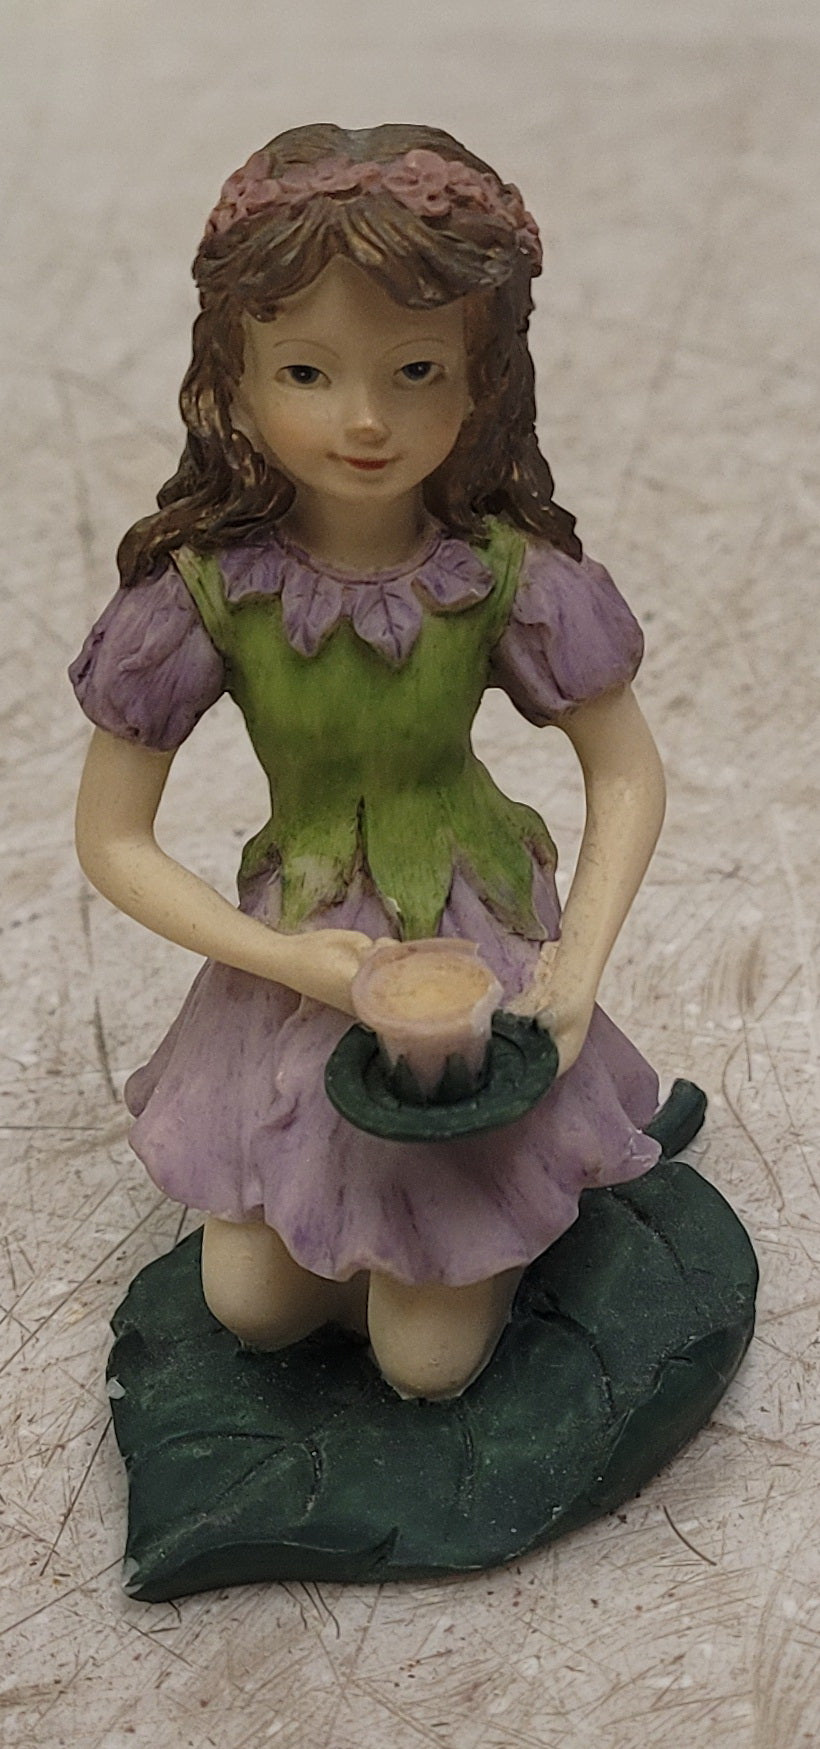 1996 Dezine Ltd The Fairy Collection #5590 Tea Fairy (damaged)